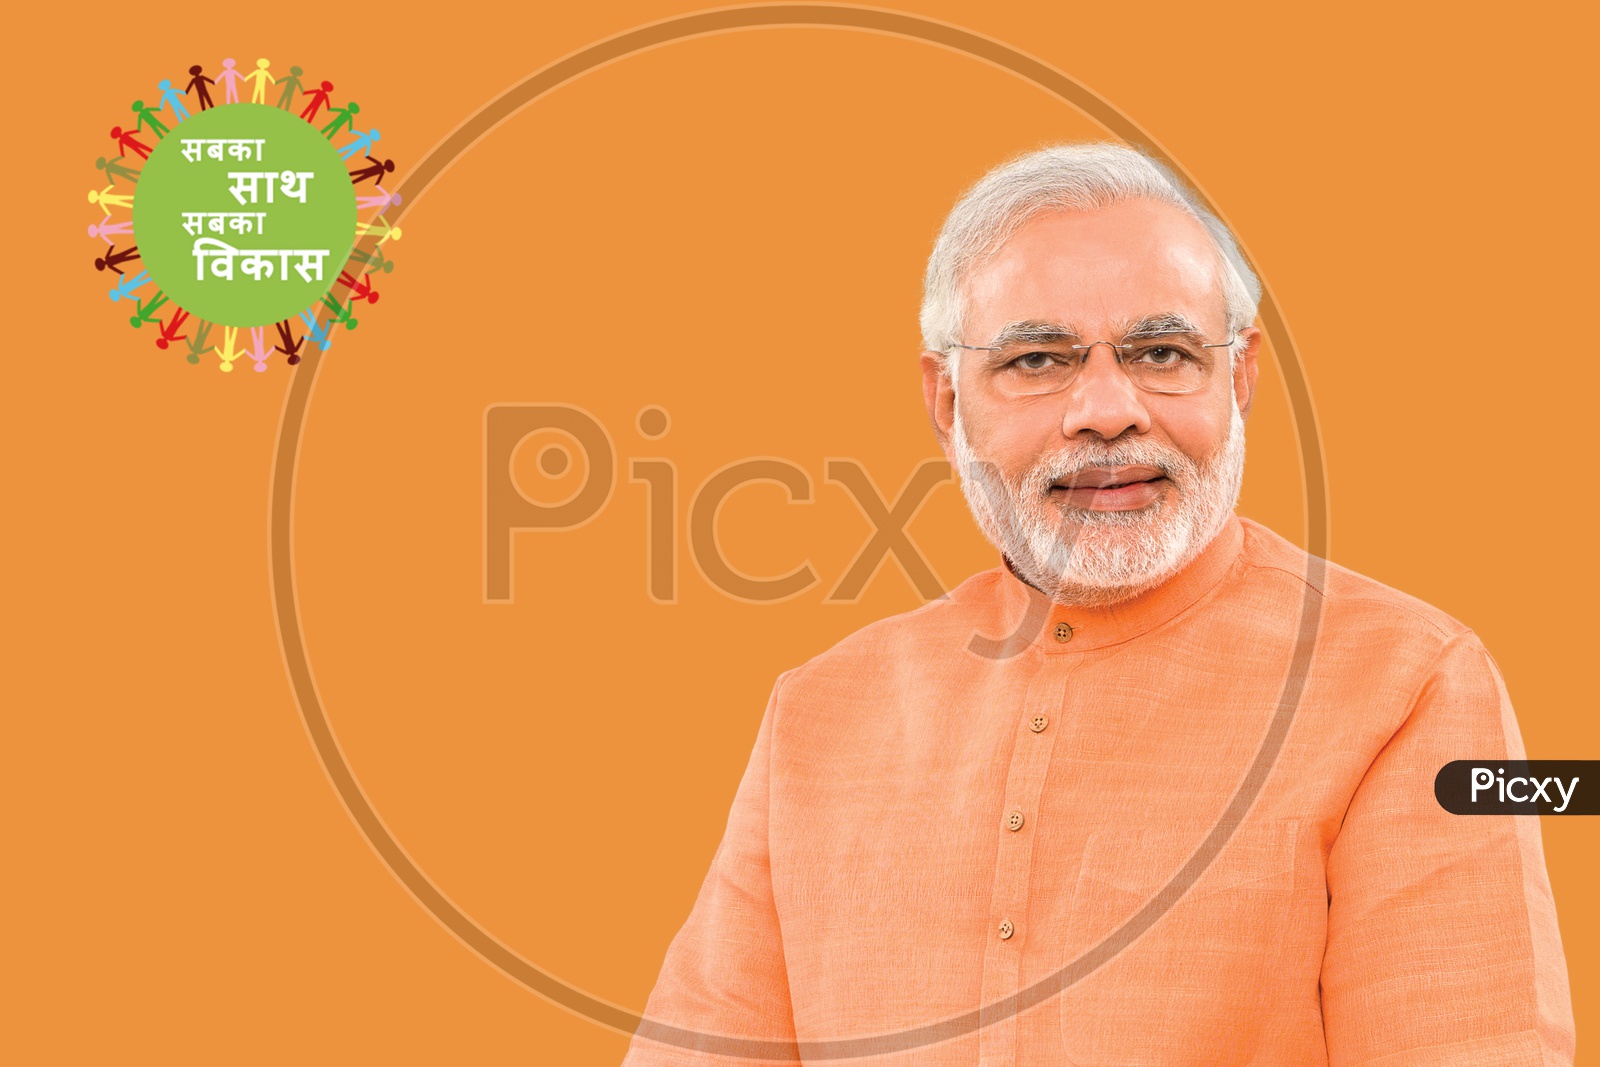 Stock Illustration shot of Prime Minister of India Narendra Modi smiling with orange background in orange suit with sabka saath sabka vikas campaign logo